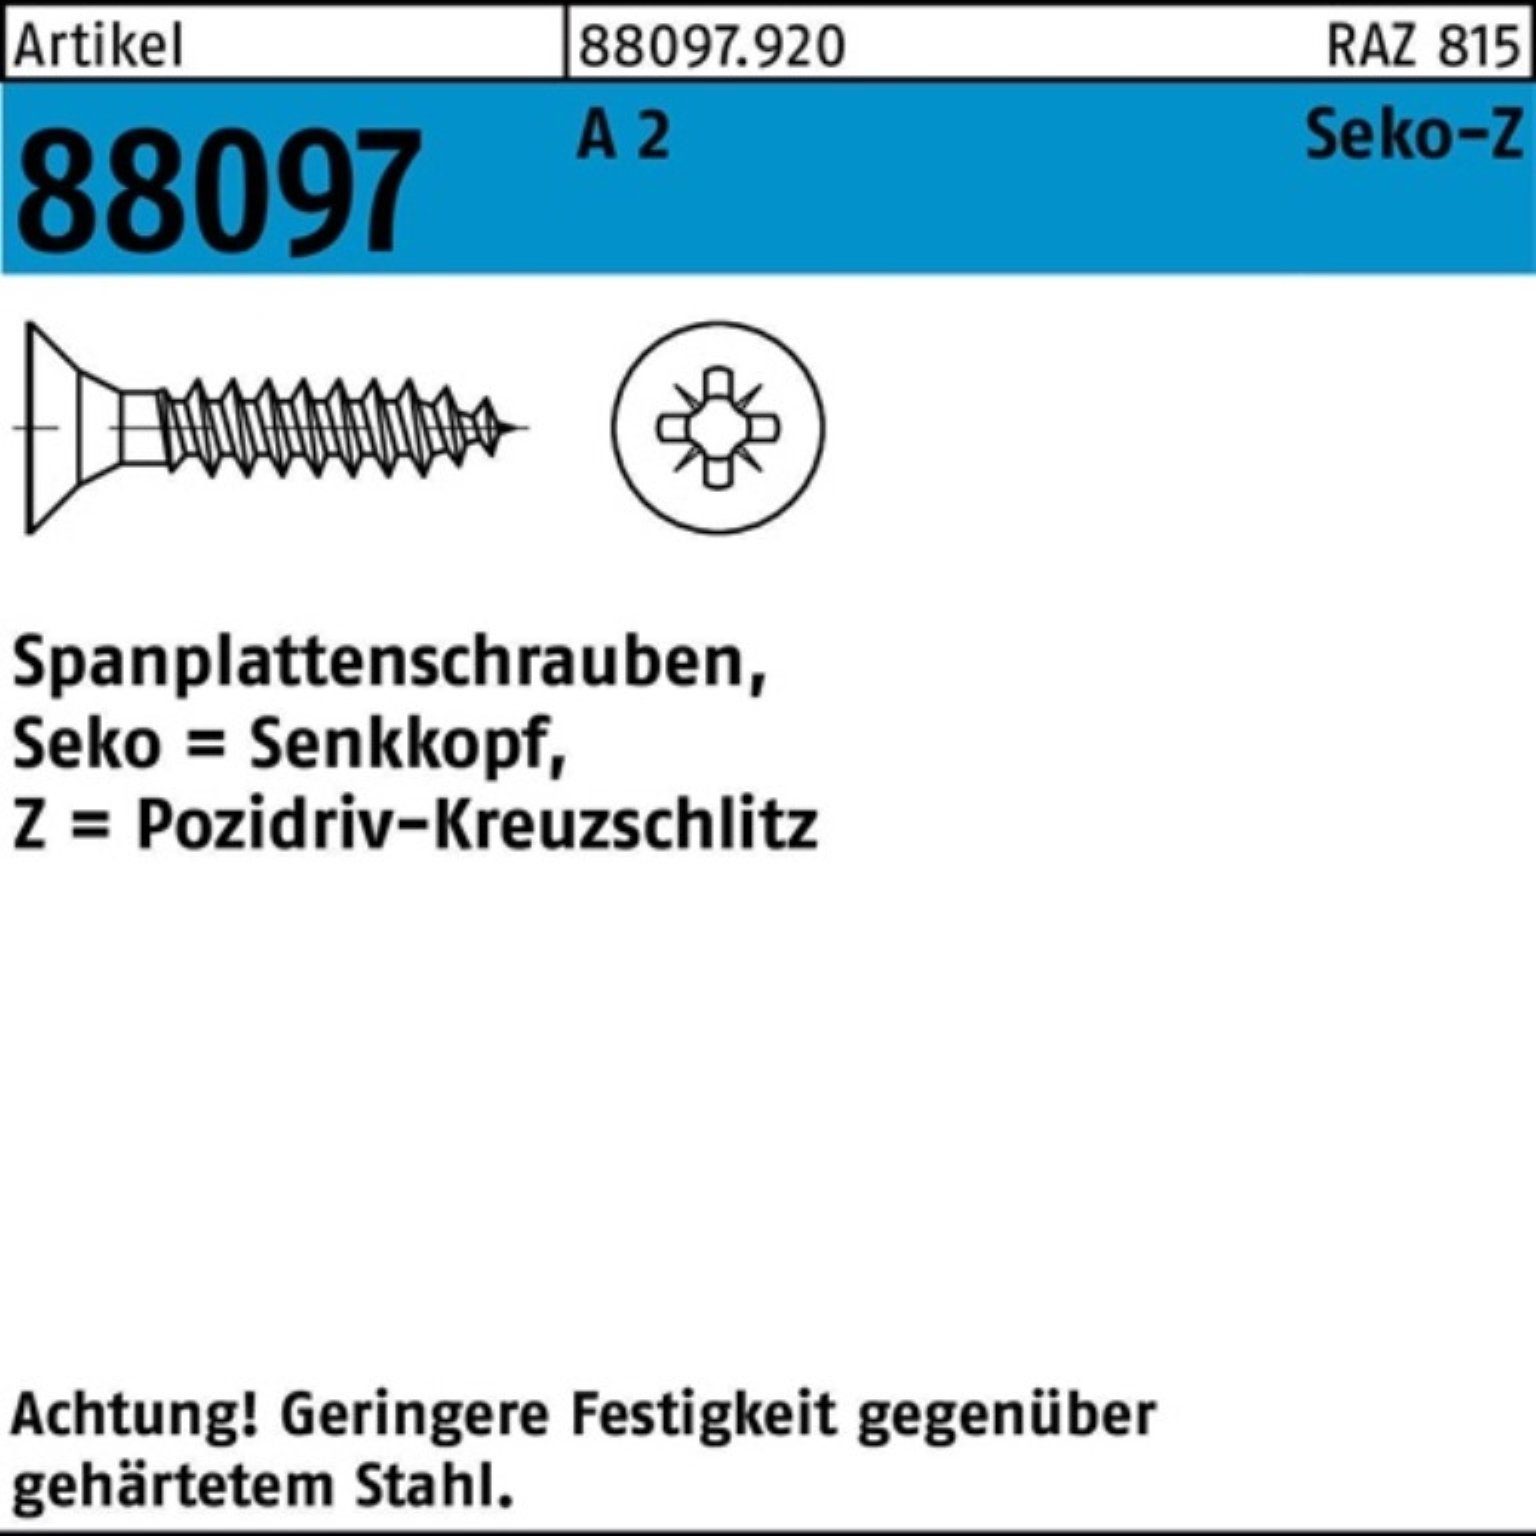 40-Z 88097 Spanplattenschraube R A Reyher 2 Spanplattenschraube 200 Pack Stüc Seko PZ 3,5x 200er